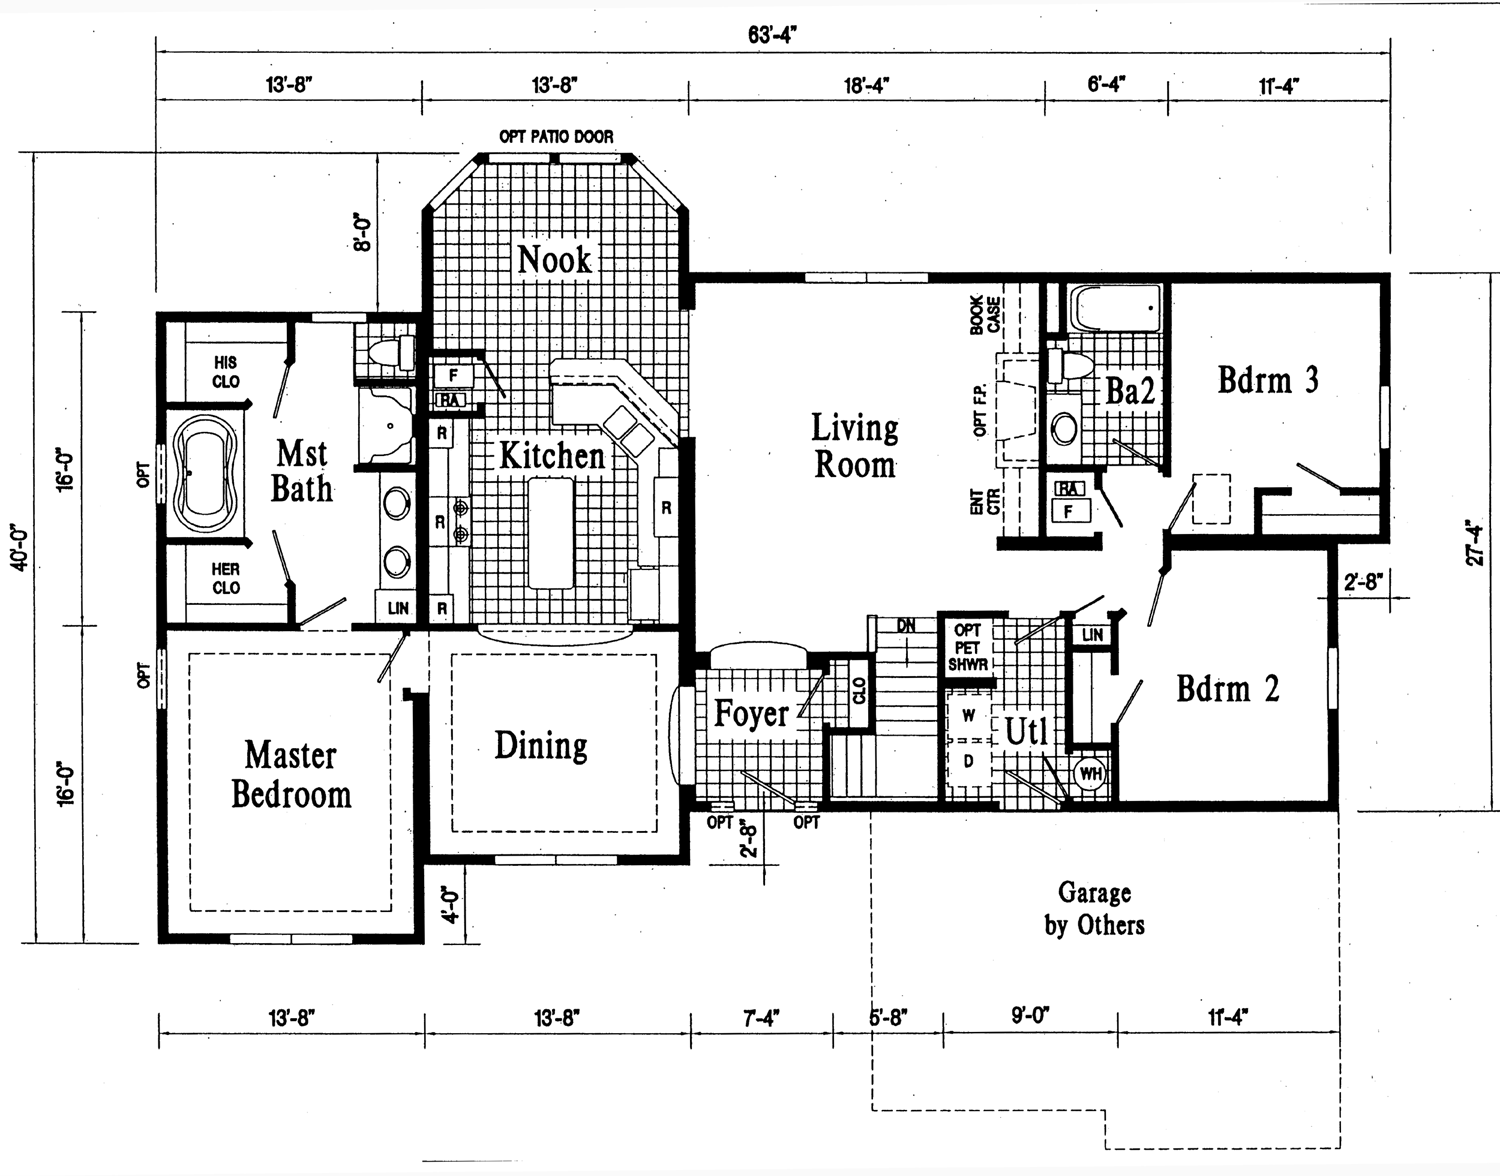 Stratford Model HT101-A Ranch Home - Floor Plan